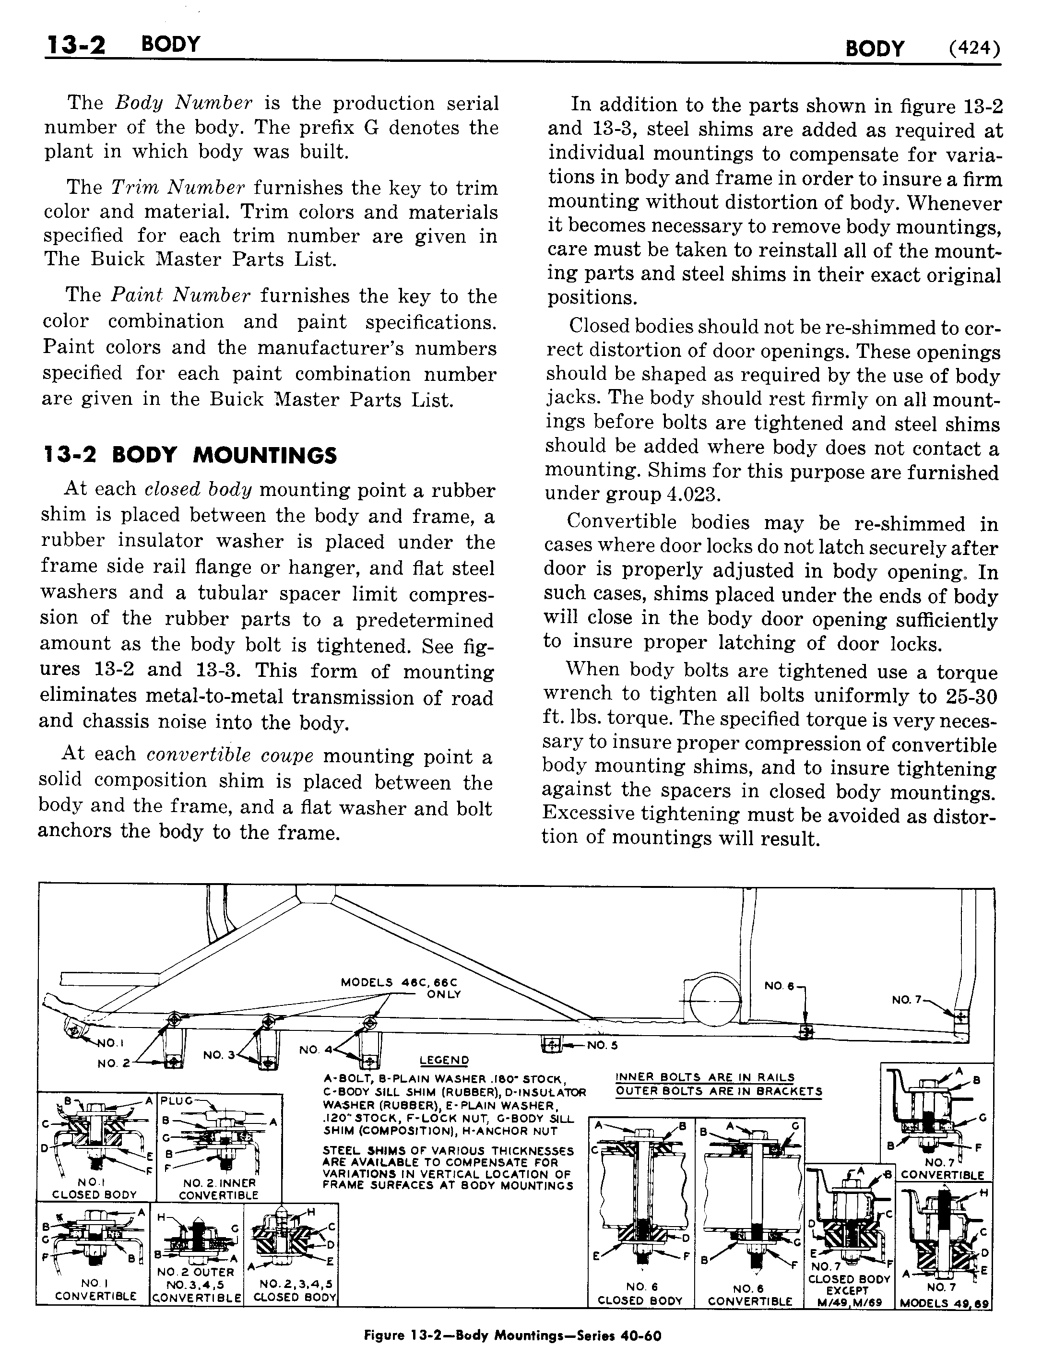 n_14 1955 Buick Shop Manual - Body-002-002.jpg